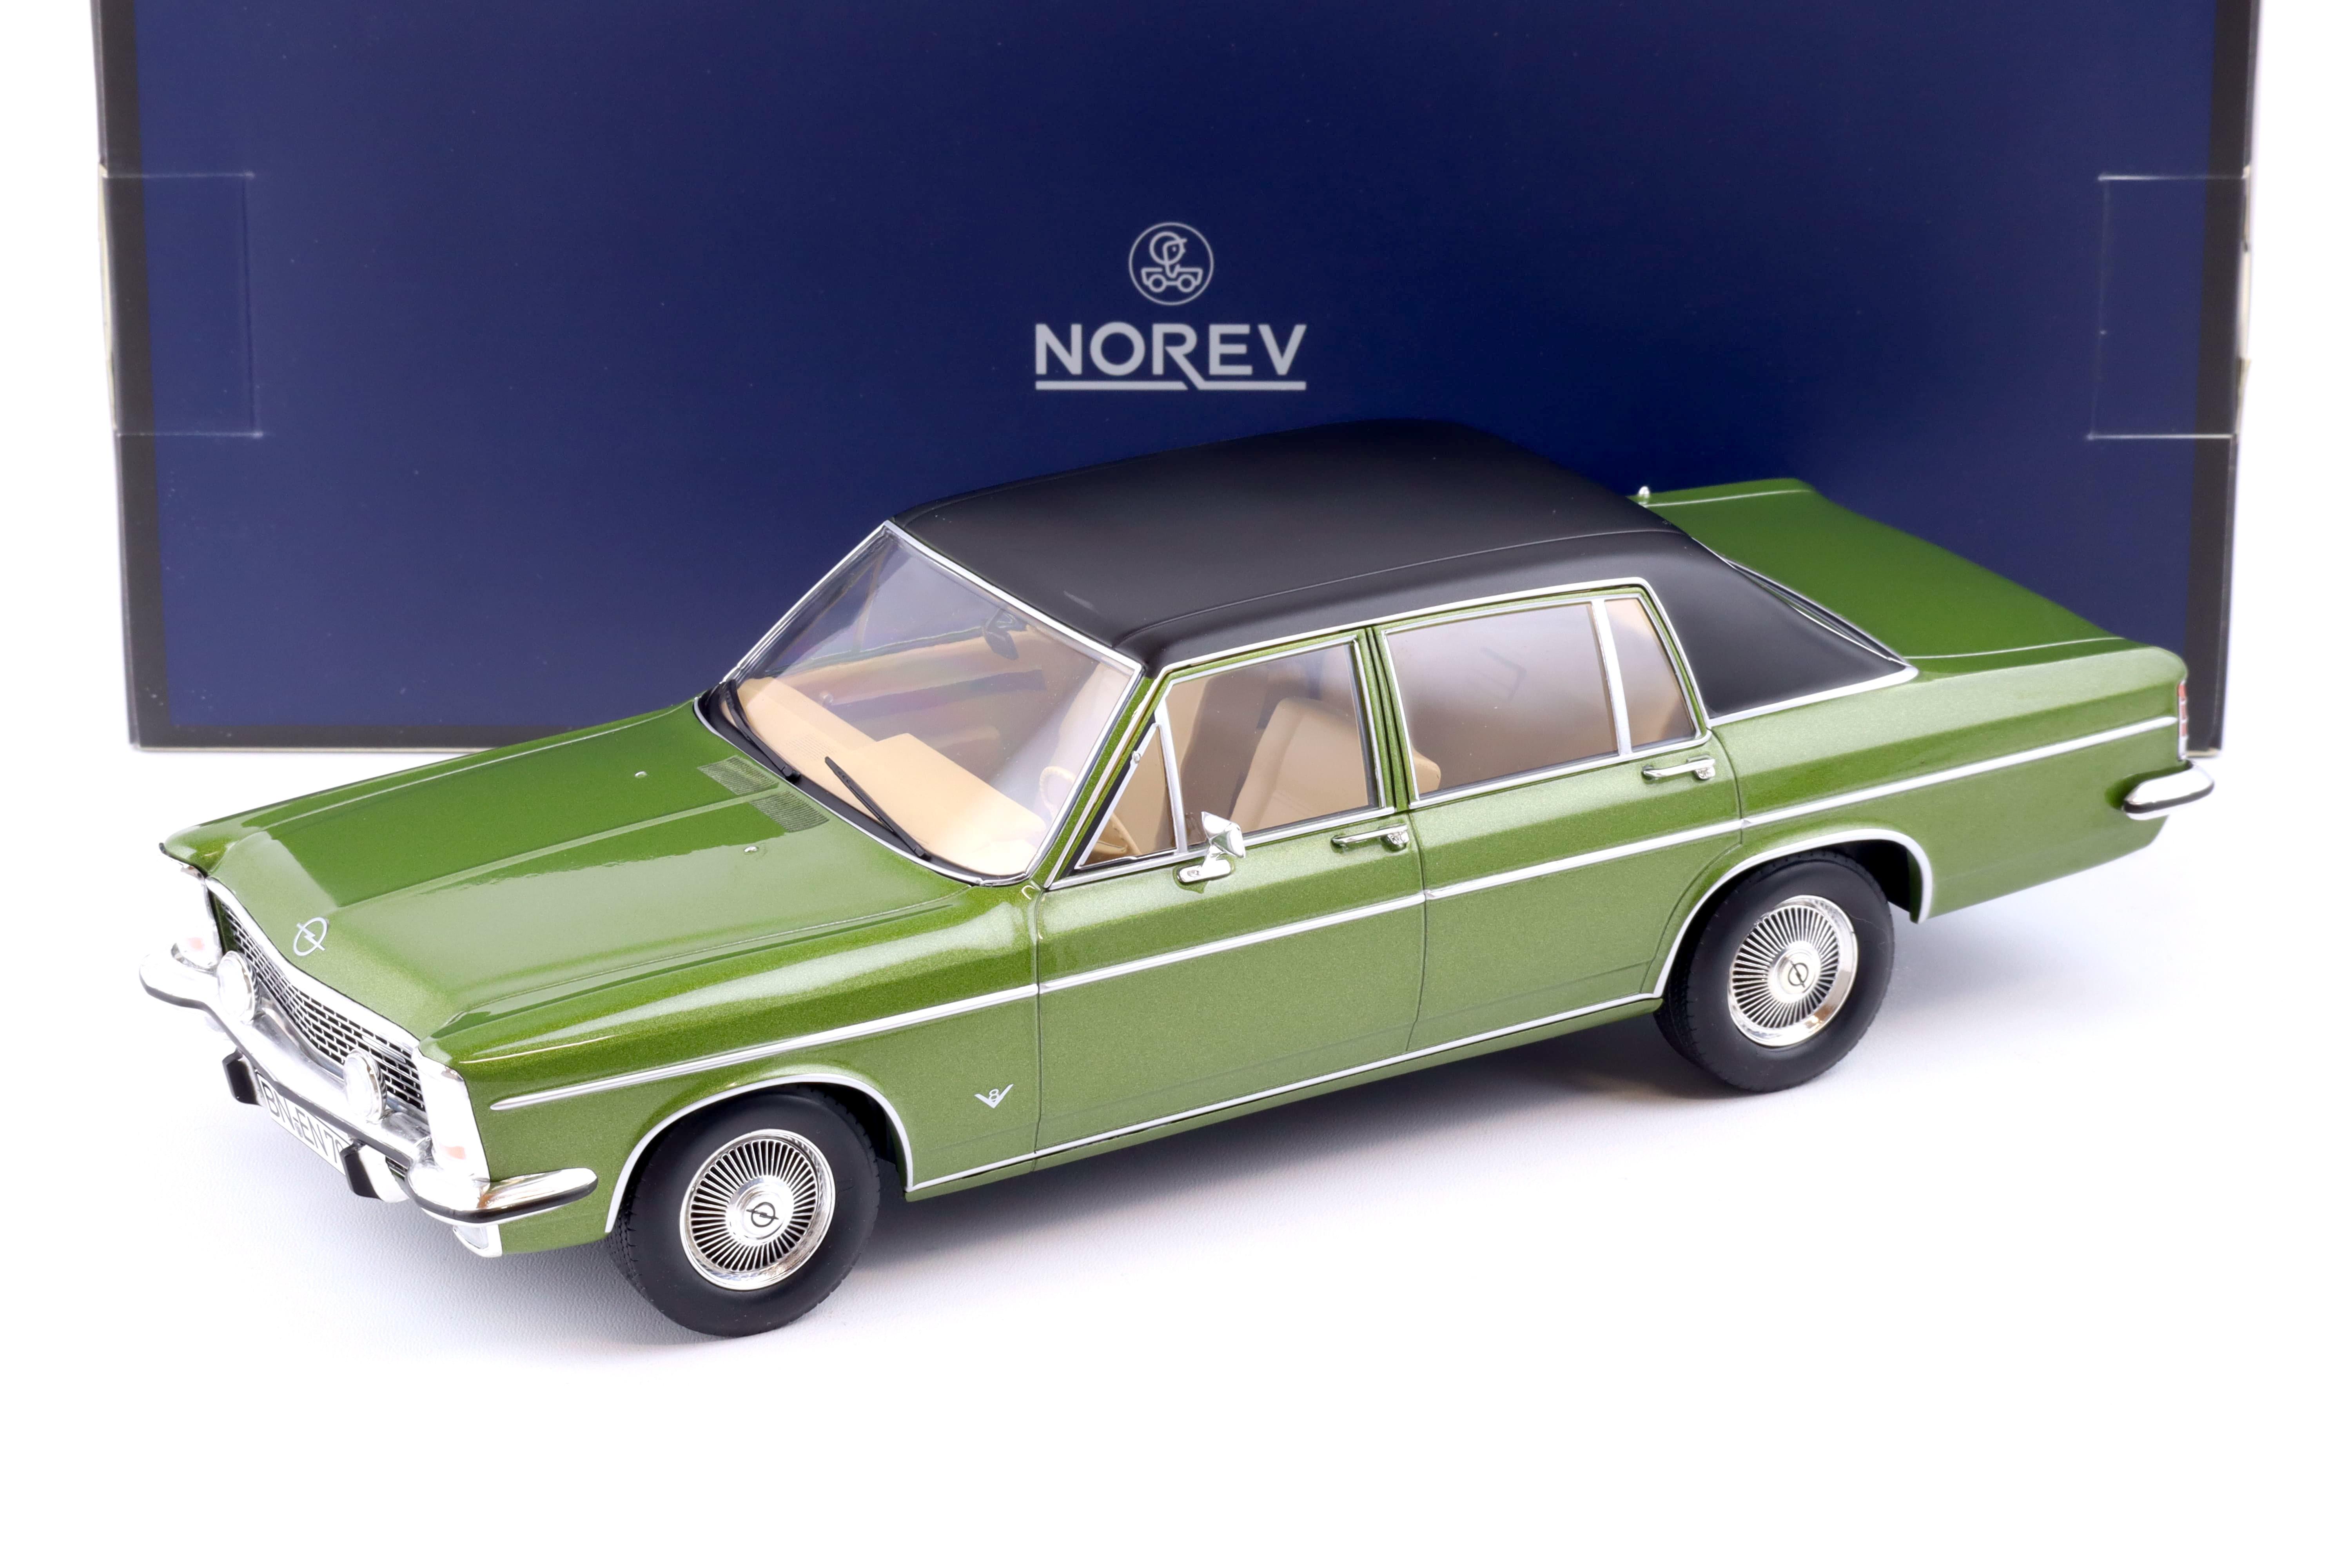 1:18 Norev Opel Diplomat V8 Limousine 1969 green metallic - Limited 300 pcs.